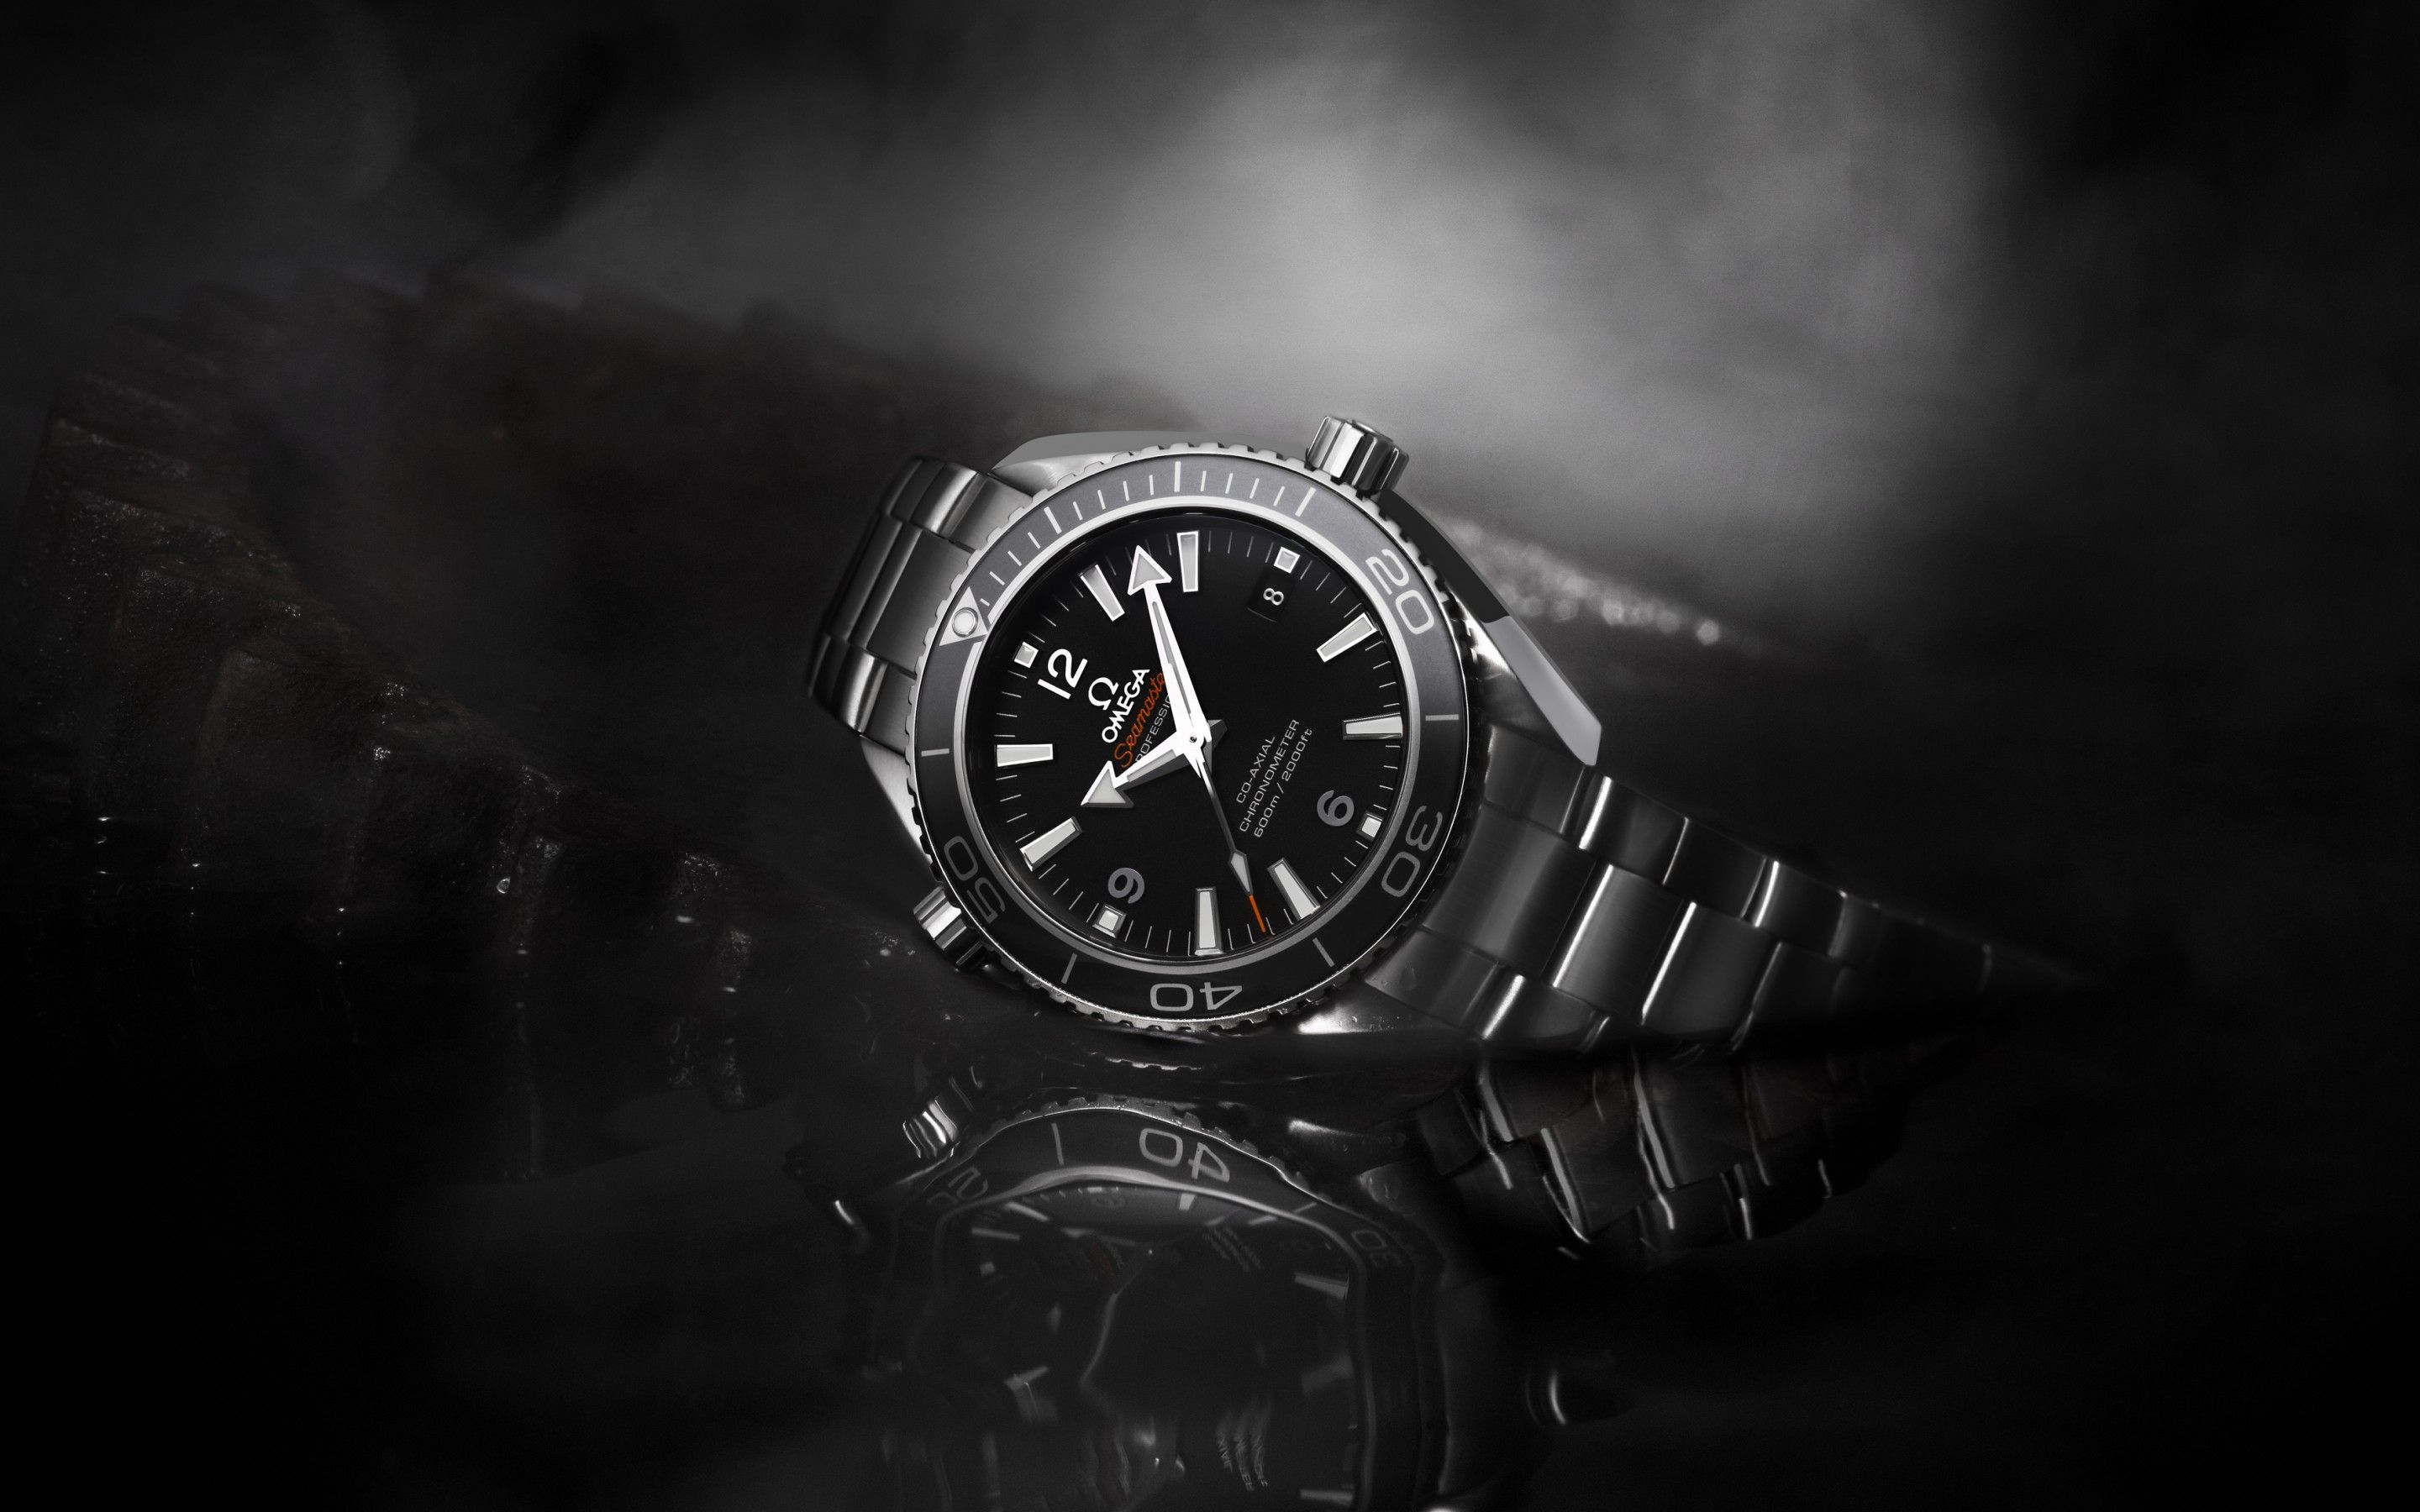 Wallpaper of OMEGA Seamaster Professional часы James Bond background & HD image